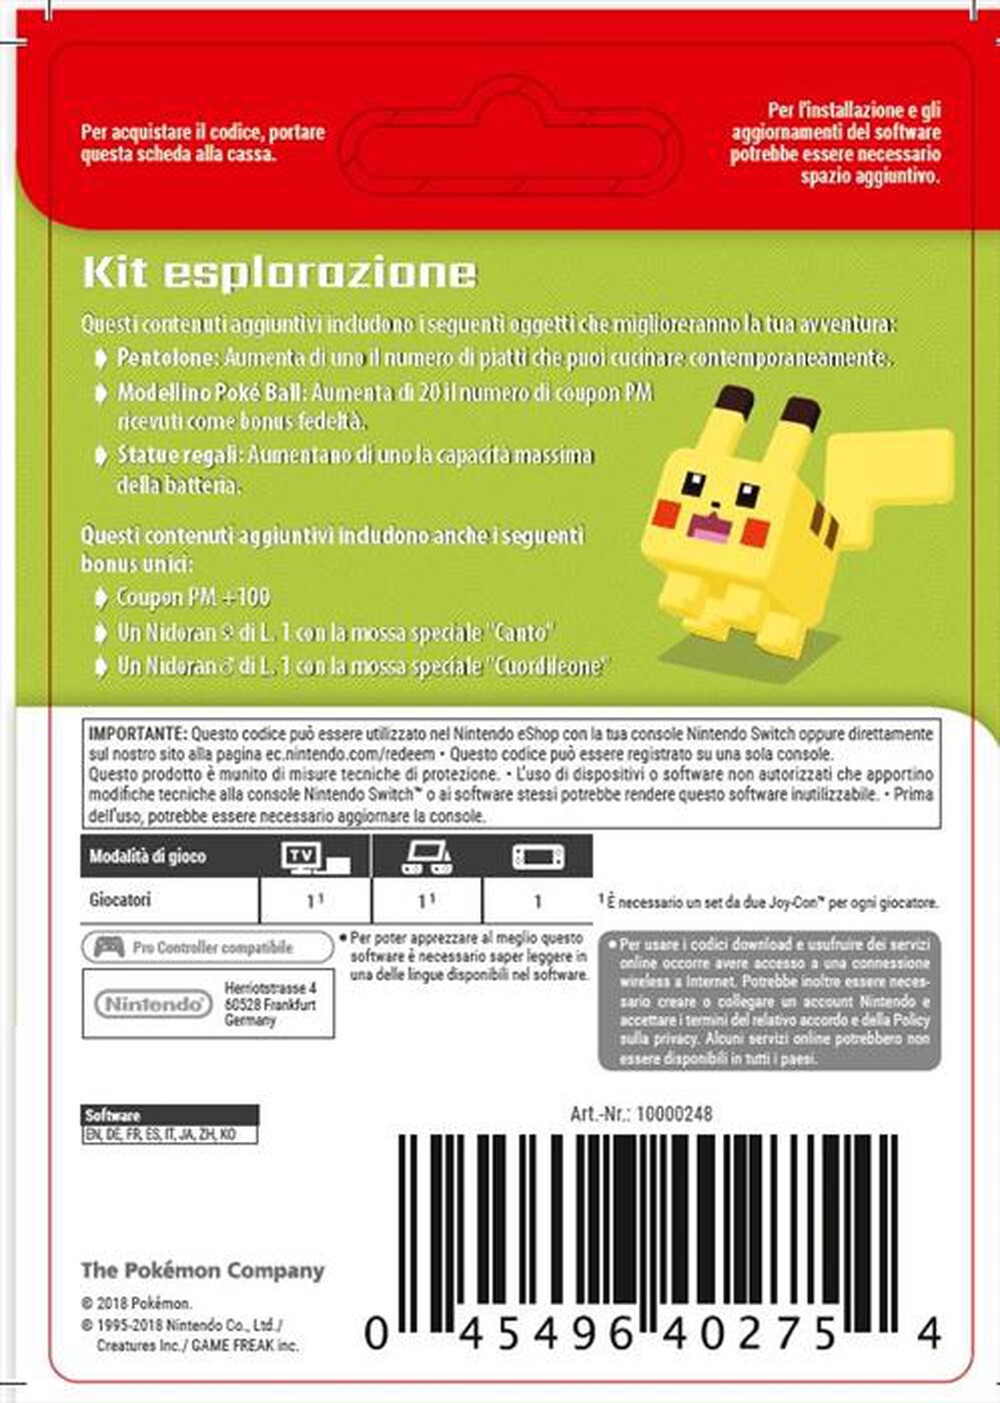 "NINTENDO - Pokémon Quest Kit Esplorazione"